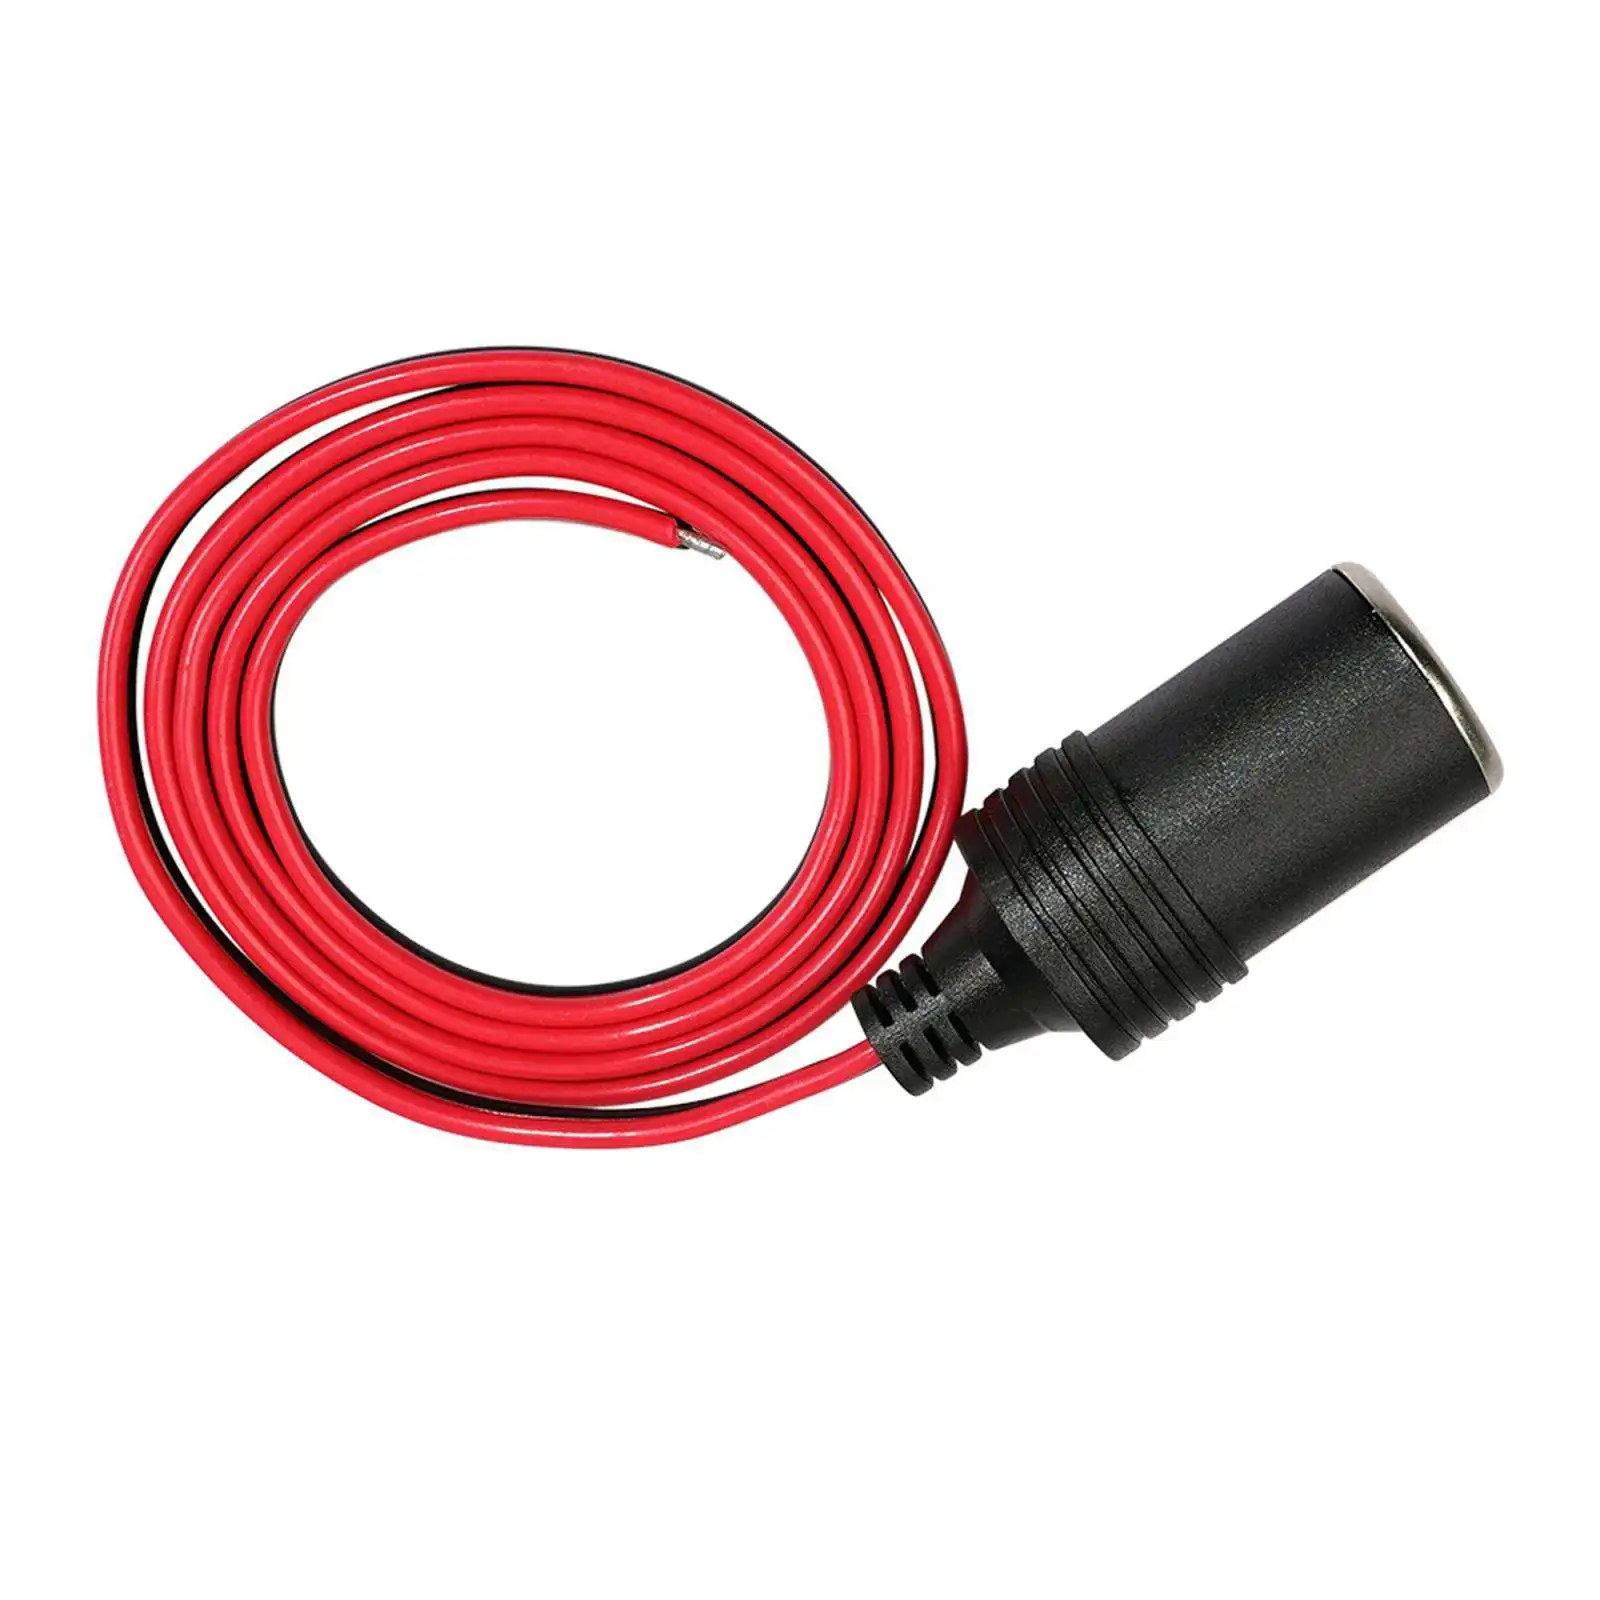 10A 12V 24V Car Cigarette Lighter Female Socket Cable Cord Power Plug Adapter